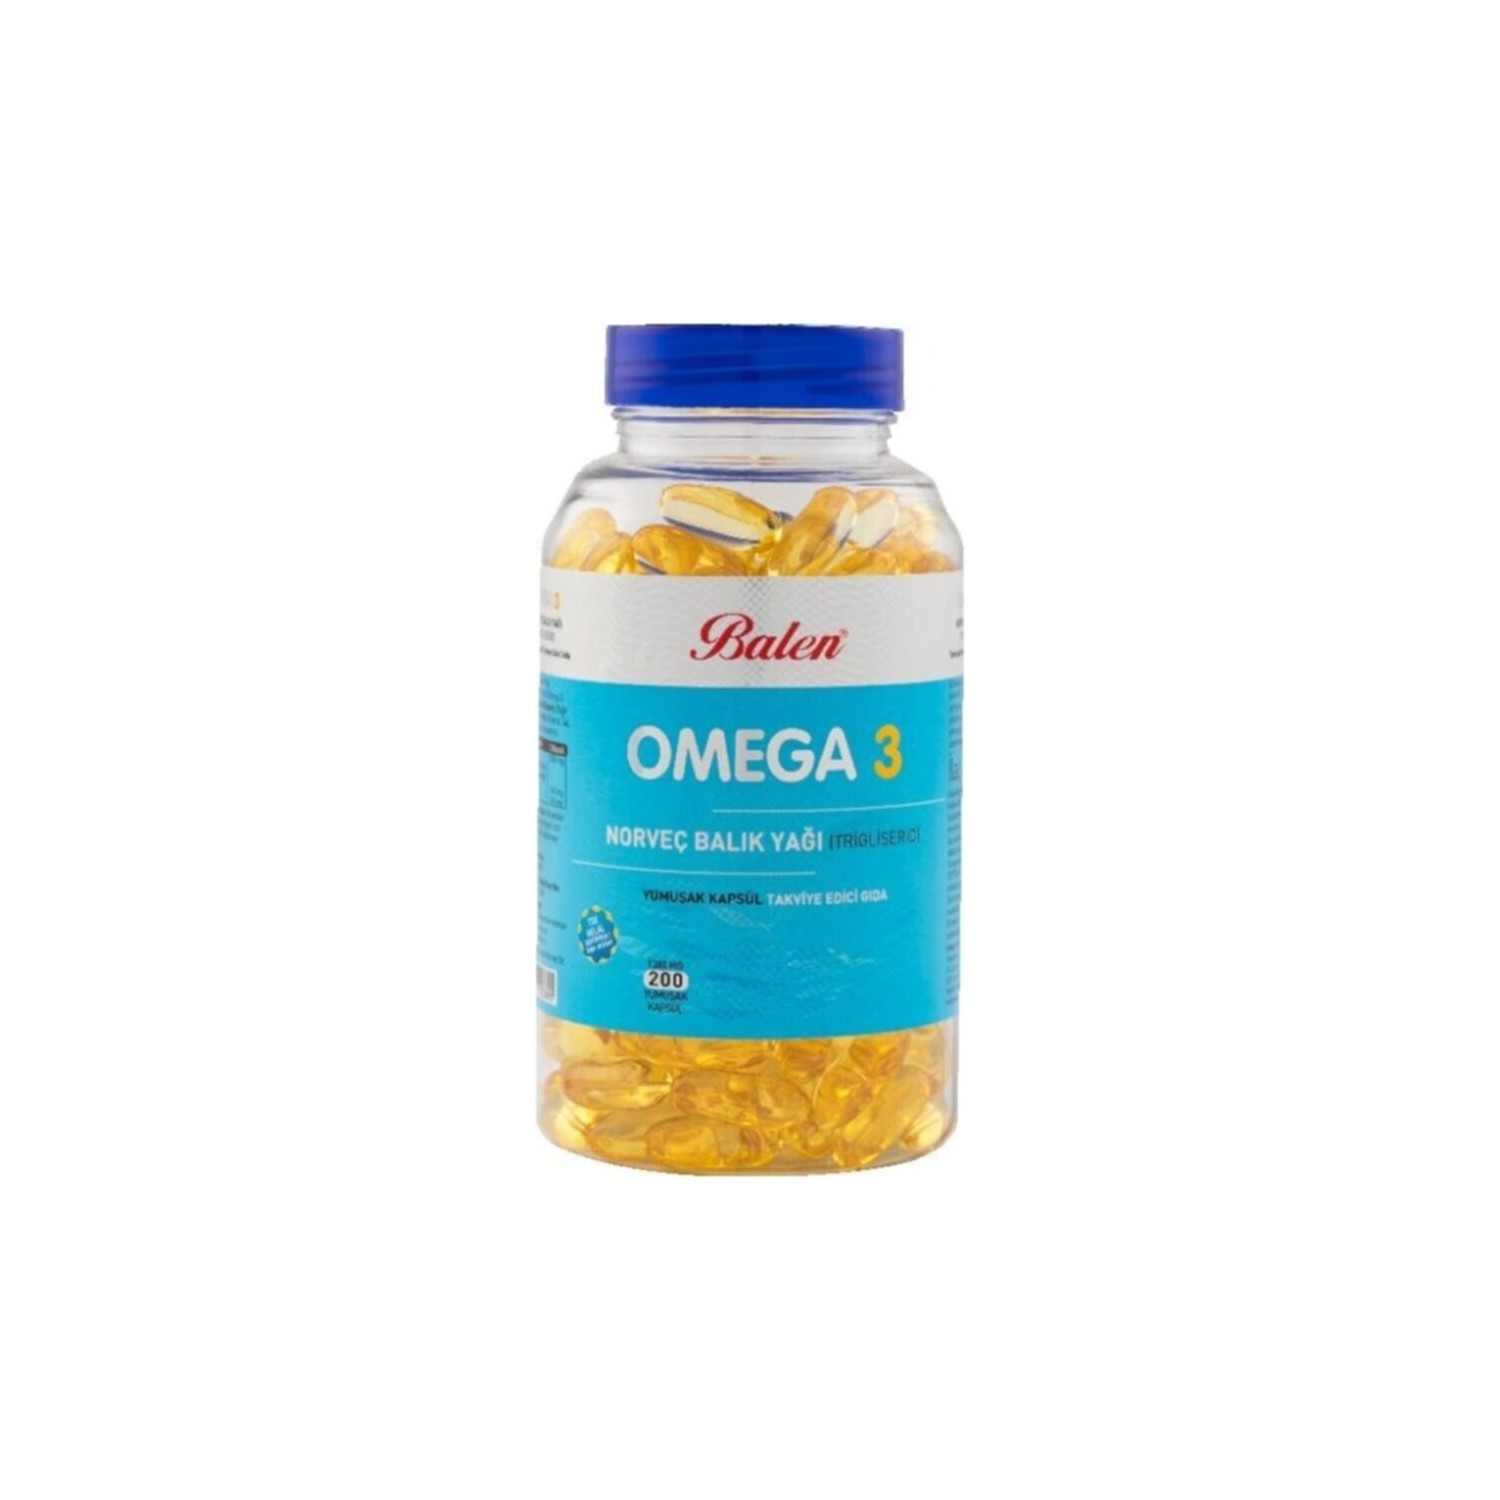 Рыбий жир Balen Omega 3, 200 капсул, 1380 мг mirrolla рыбий жир капсулы массой 370 мг 200 шт